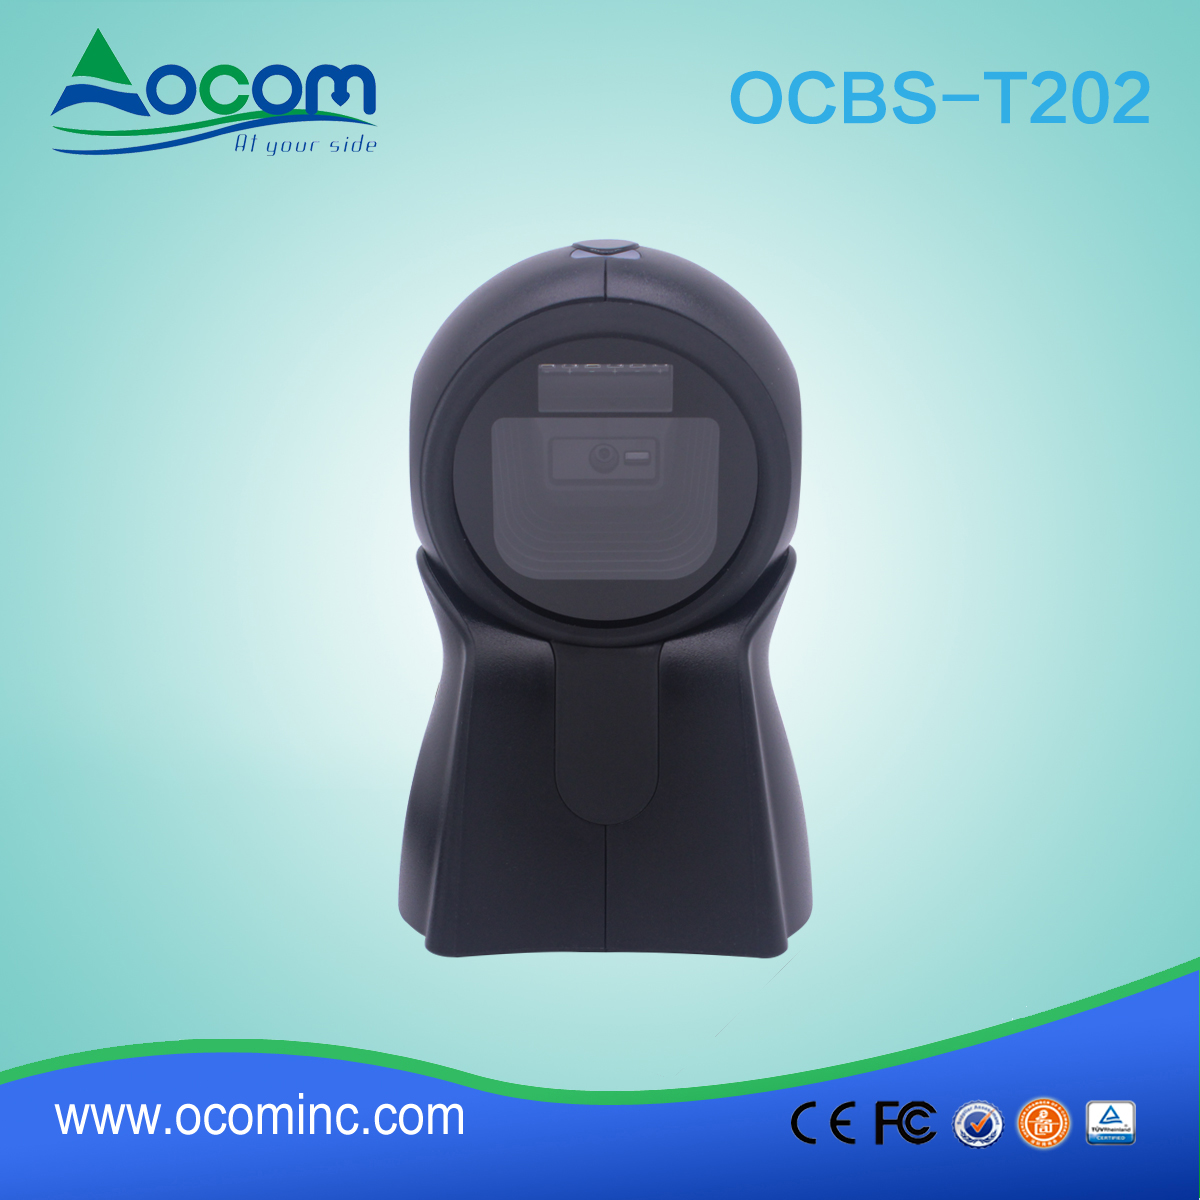 OCBS-T202 Image 2D QR Code Omni Direcional Barcode Scanner